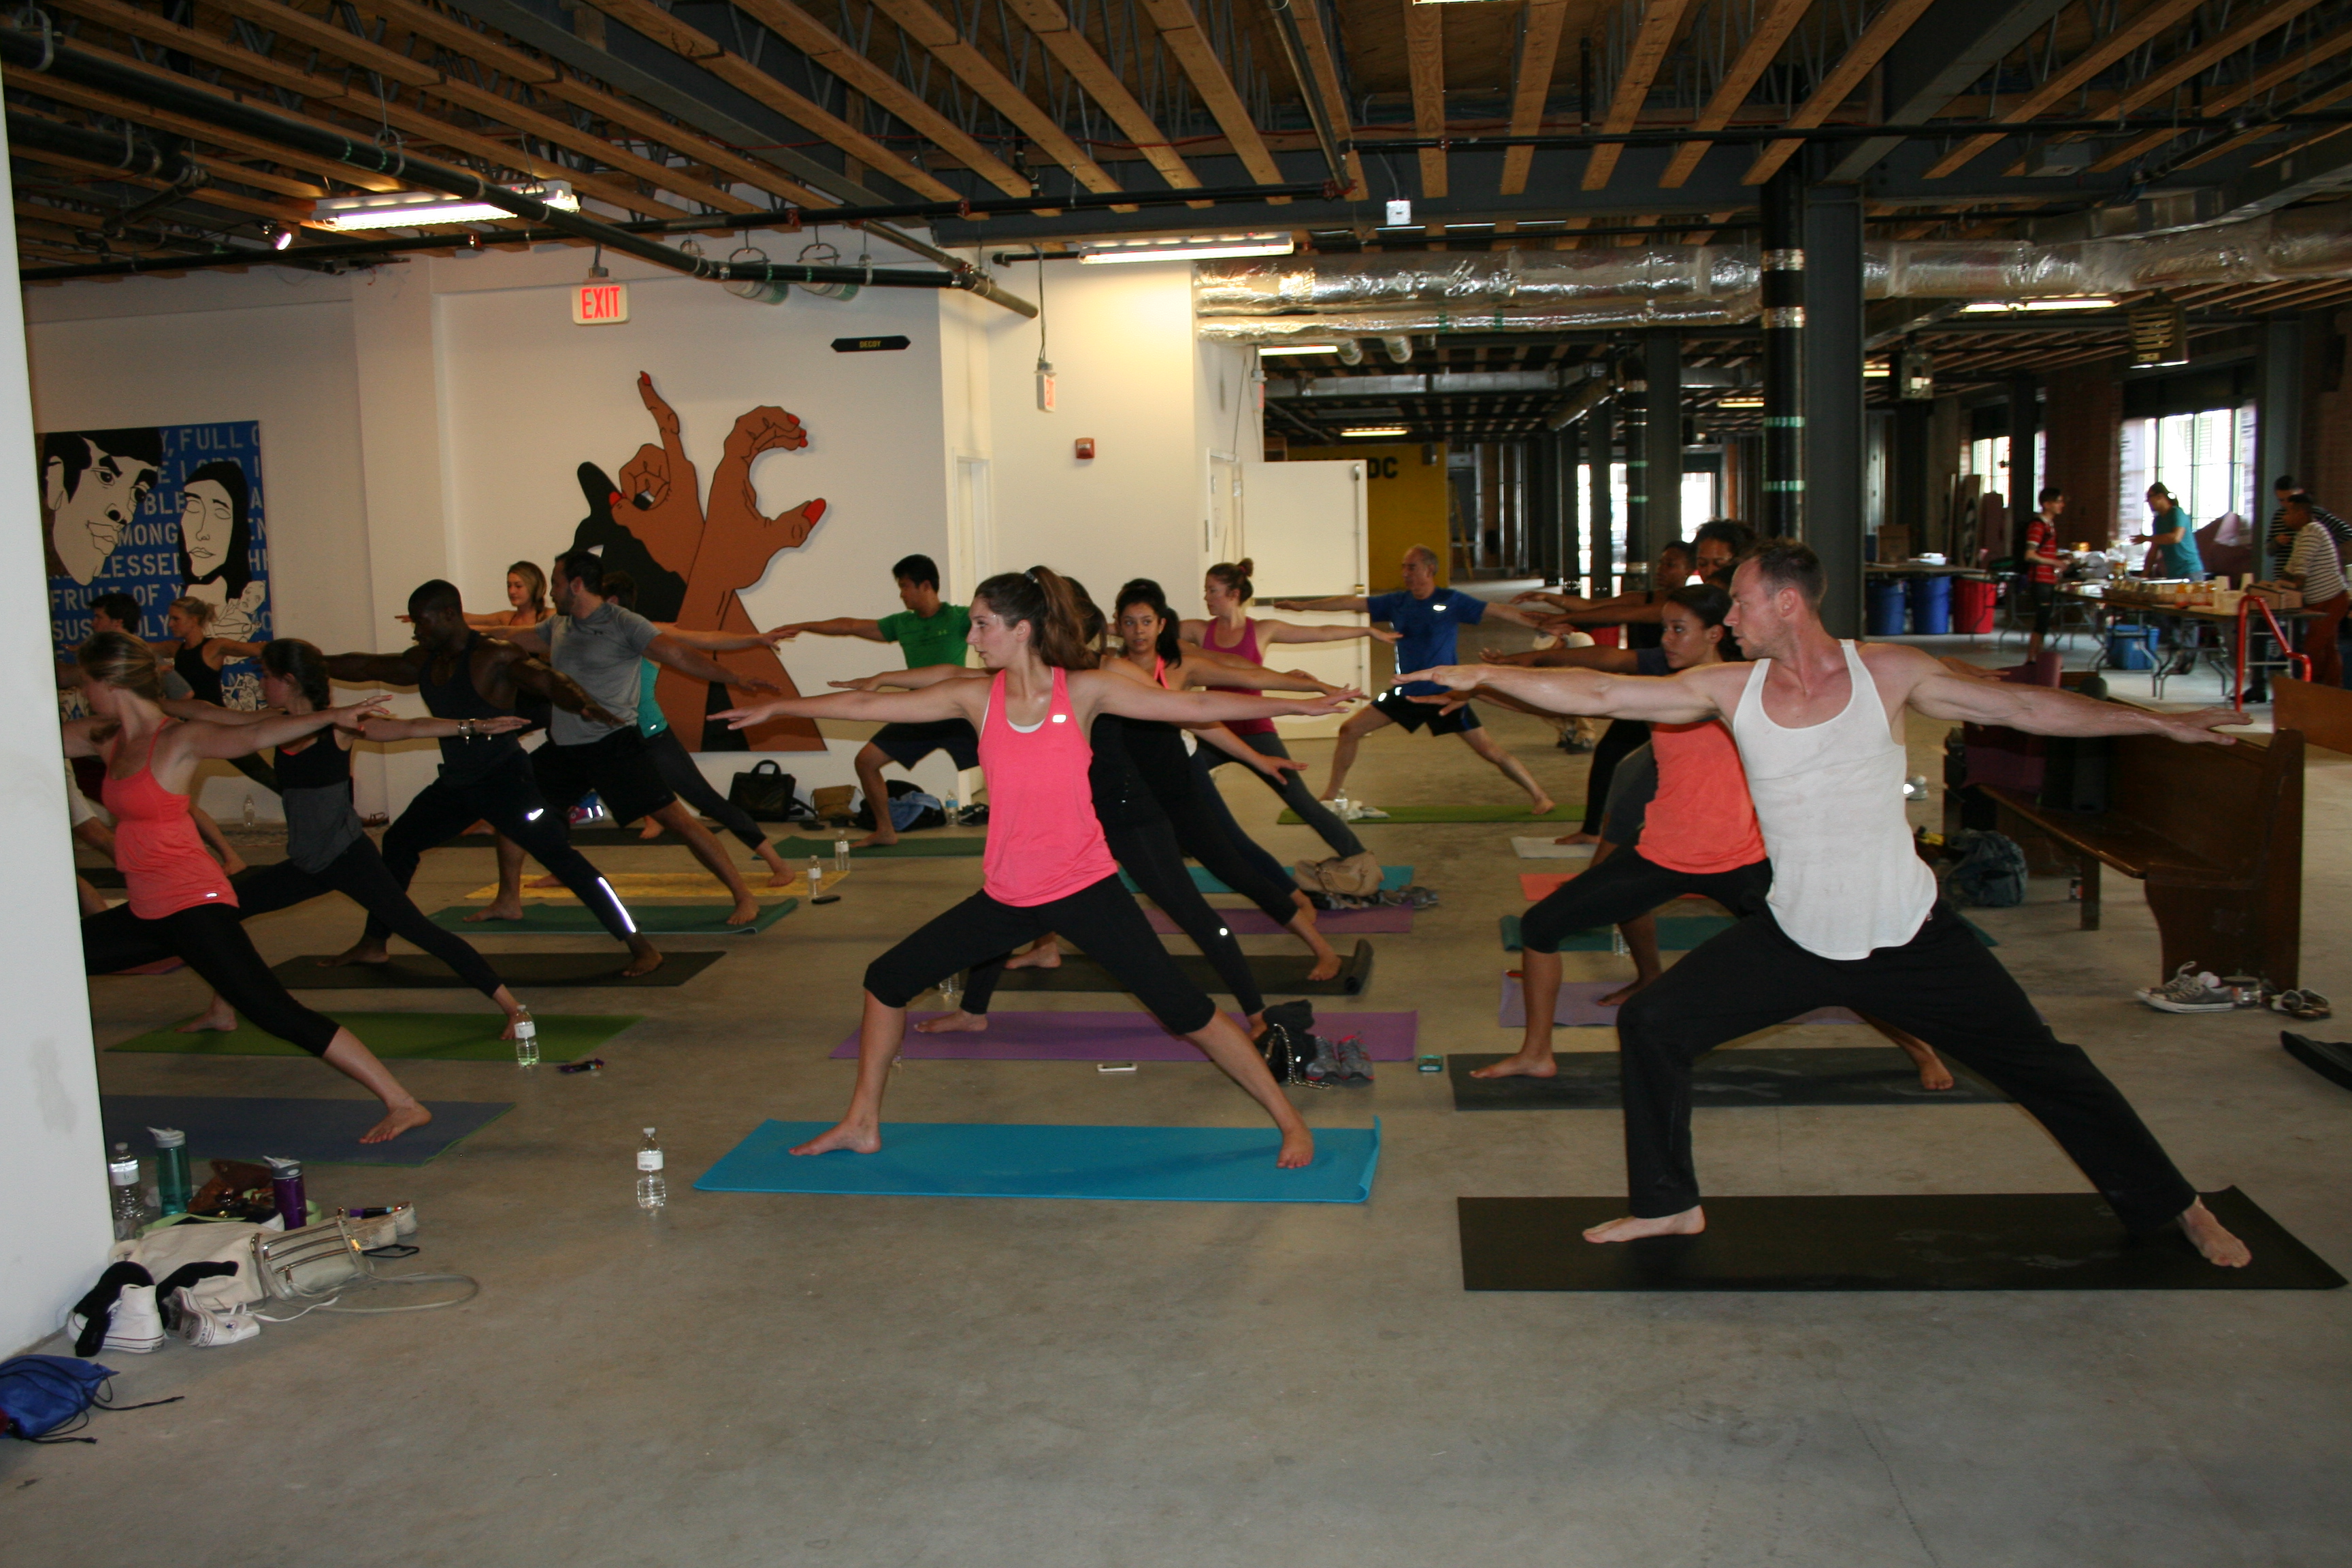 Bendy Brunch participants practice yoga among art at the old Wonder Bread Factory. (Photo: Mark Heckathorn/DC on Heels)